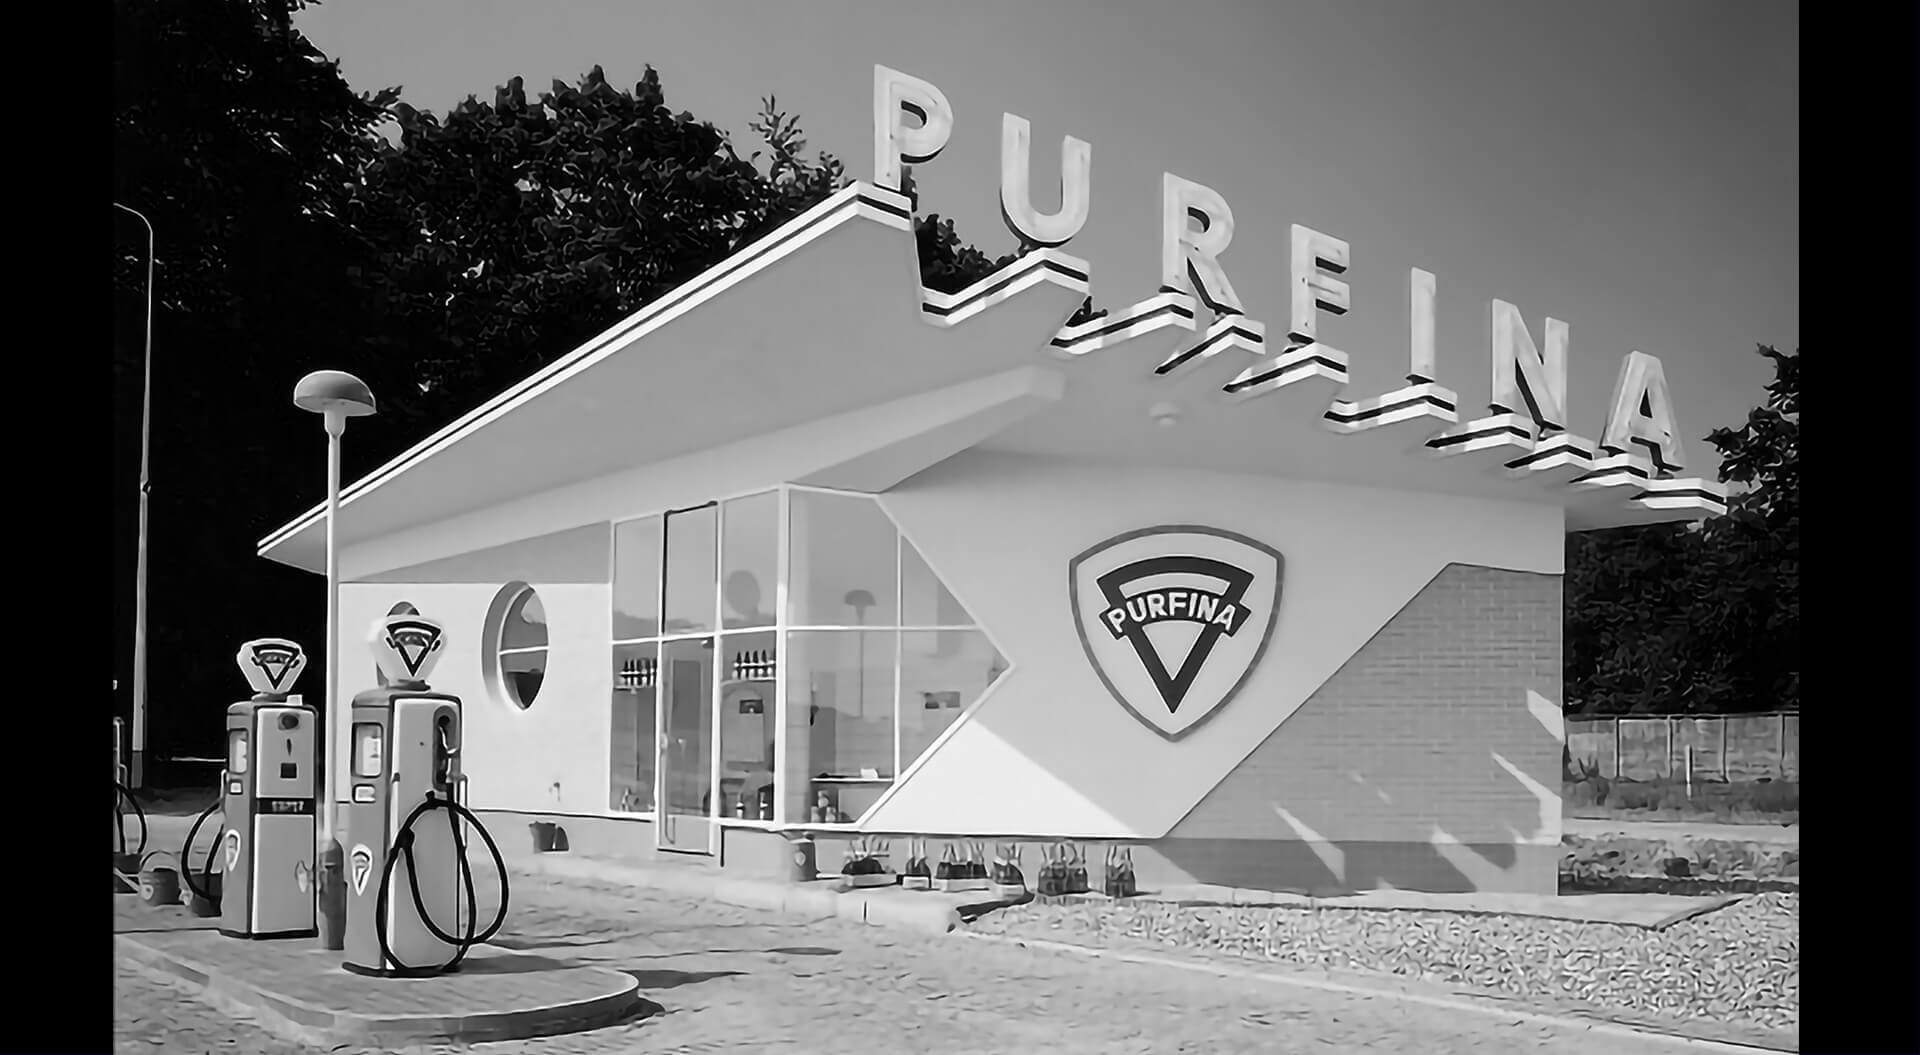 Purfina Petrol Station Benchmark Icon Architecture, Sybold van Ravesteyn, Architect, Netherlands, 1955-1957 - CampbellRigg Agency